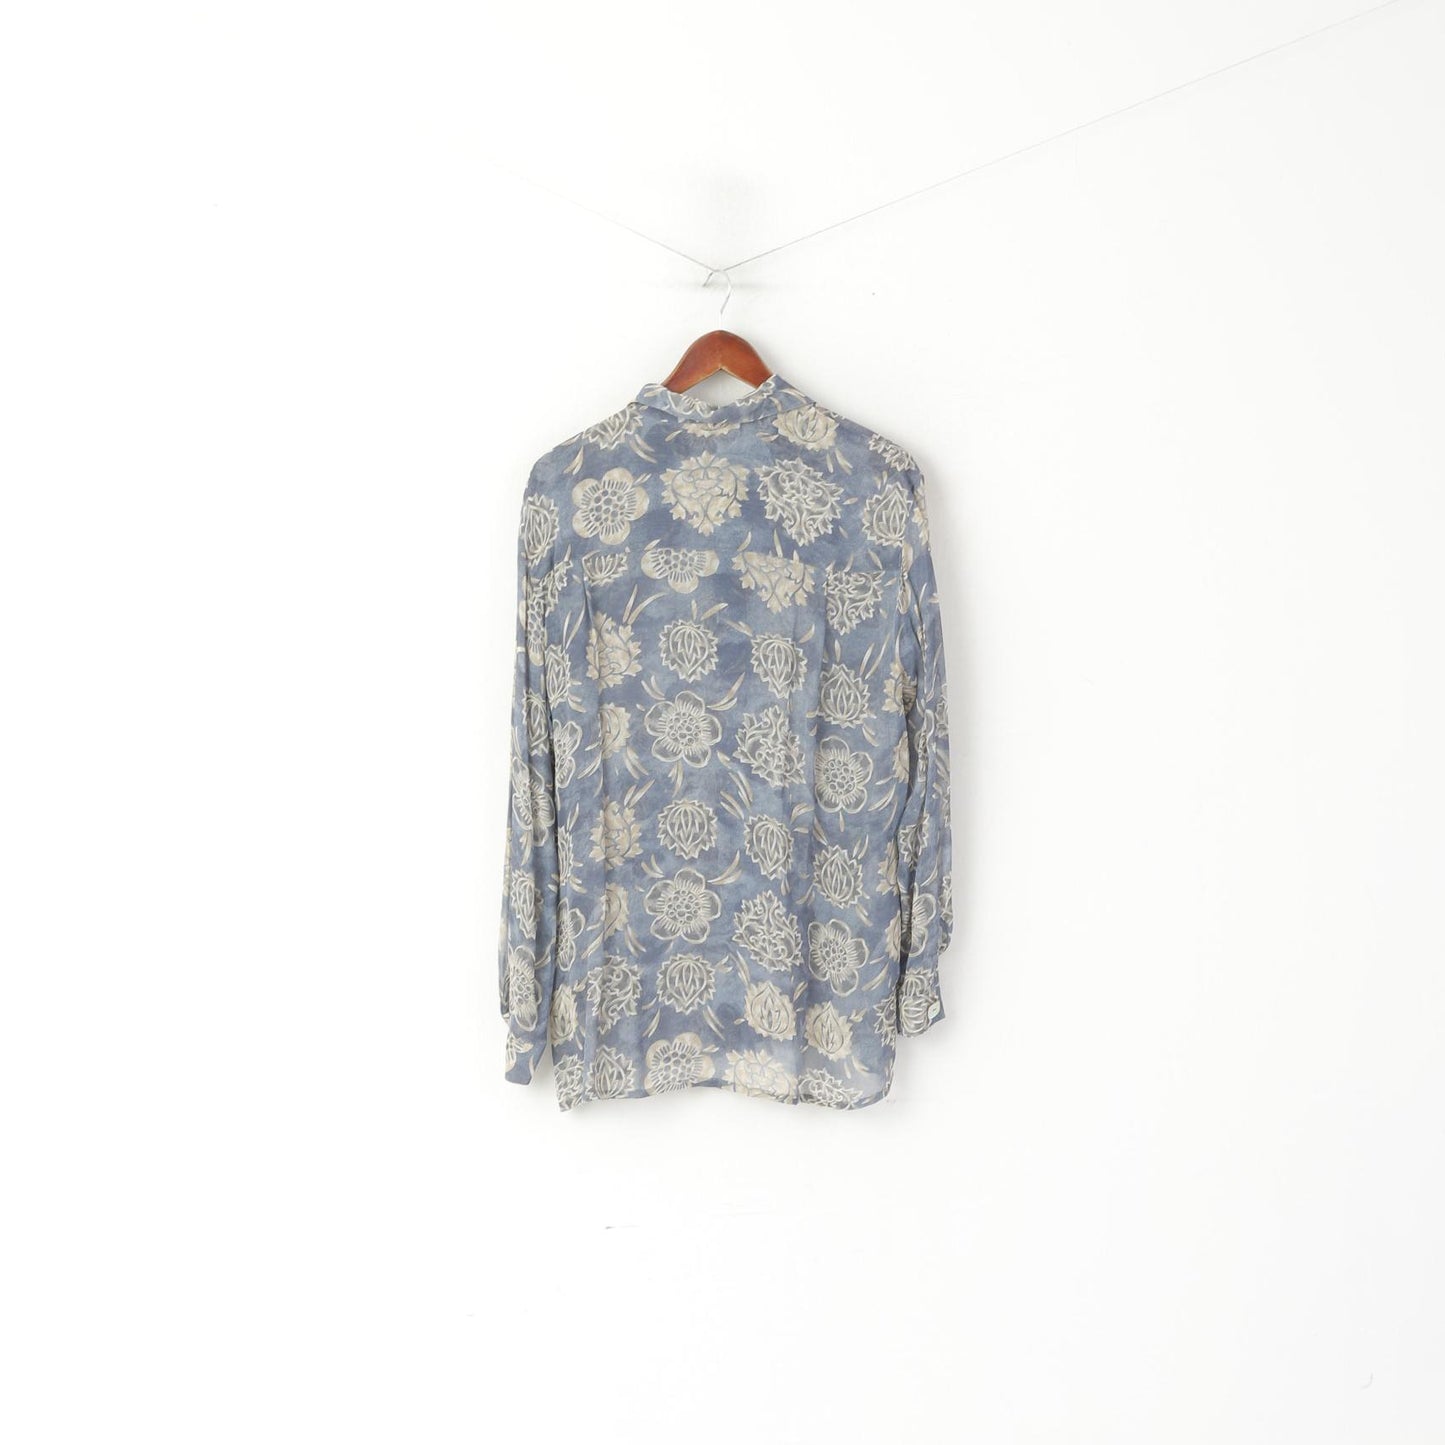 Marc Aurel Women 36 M Casual Shirt Blue Viscose Translucent Material Elegant Top